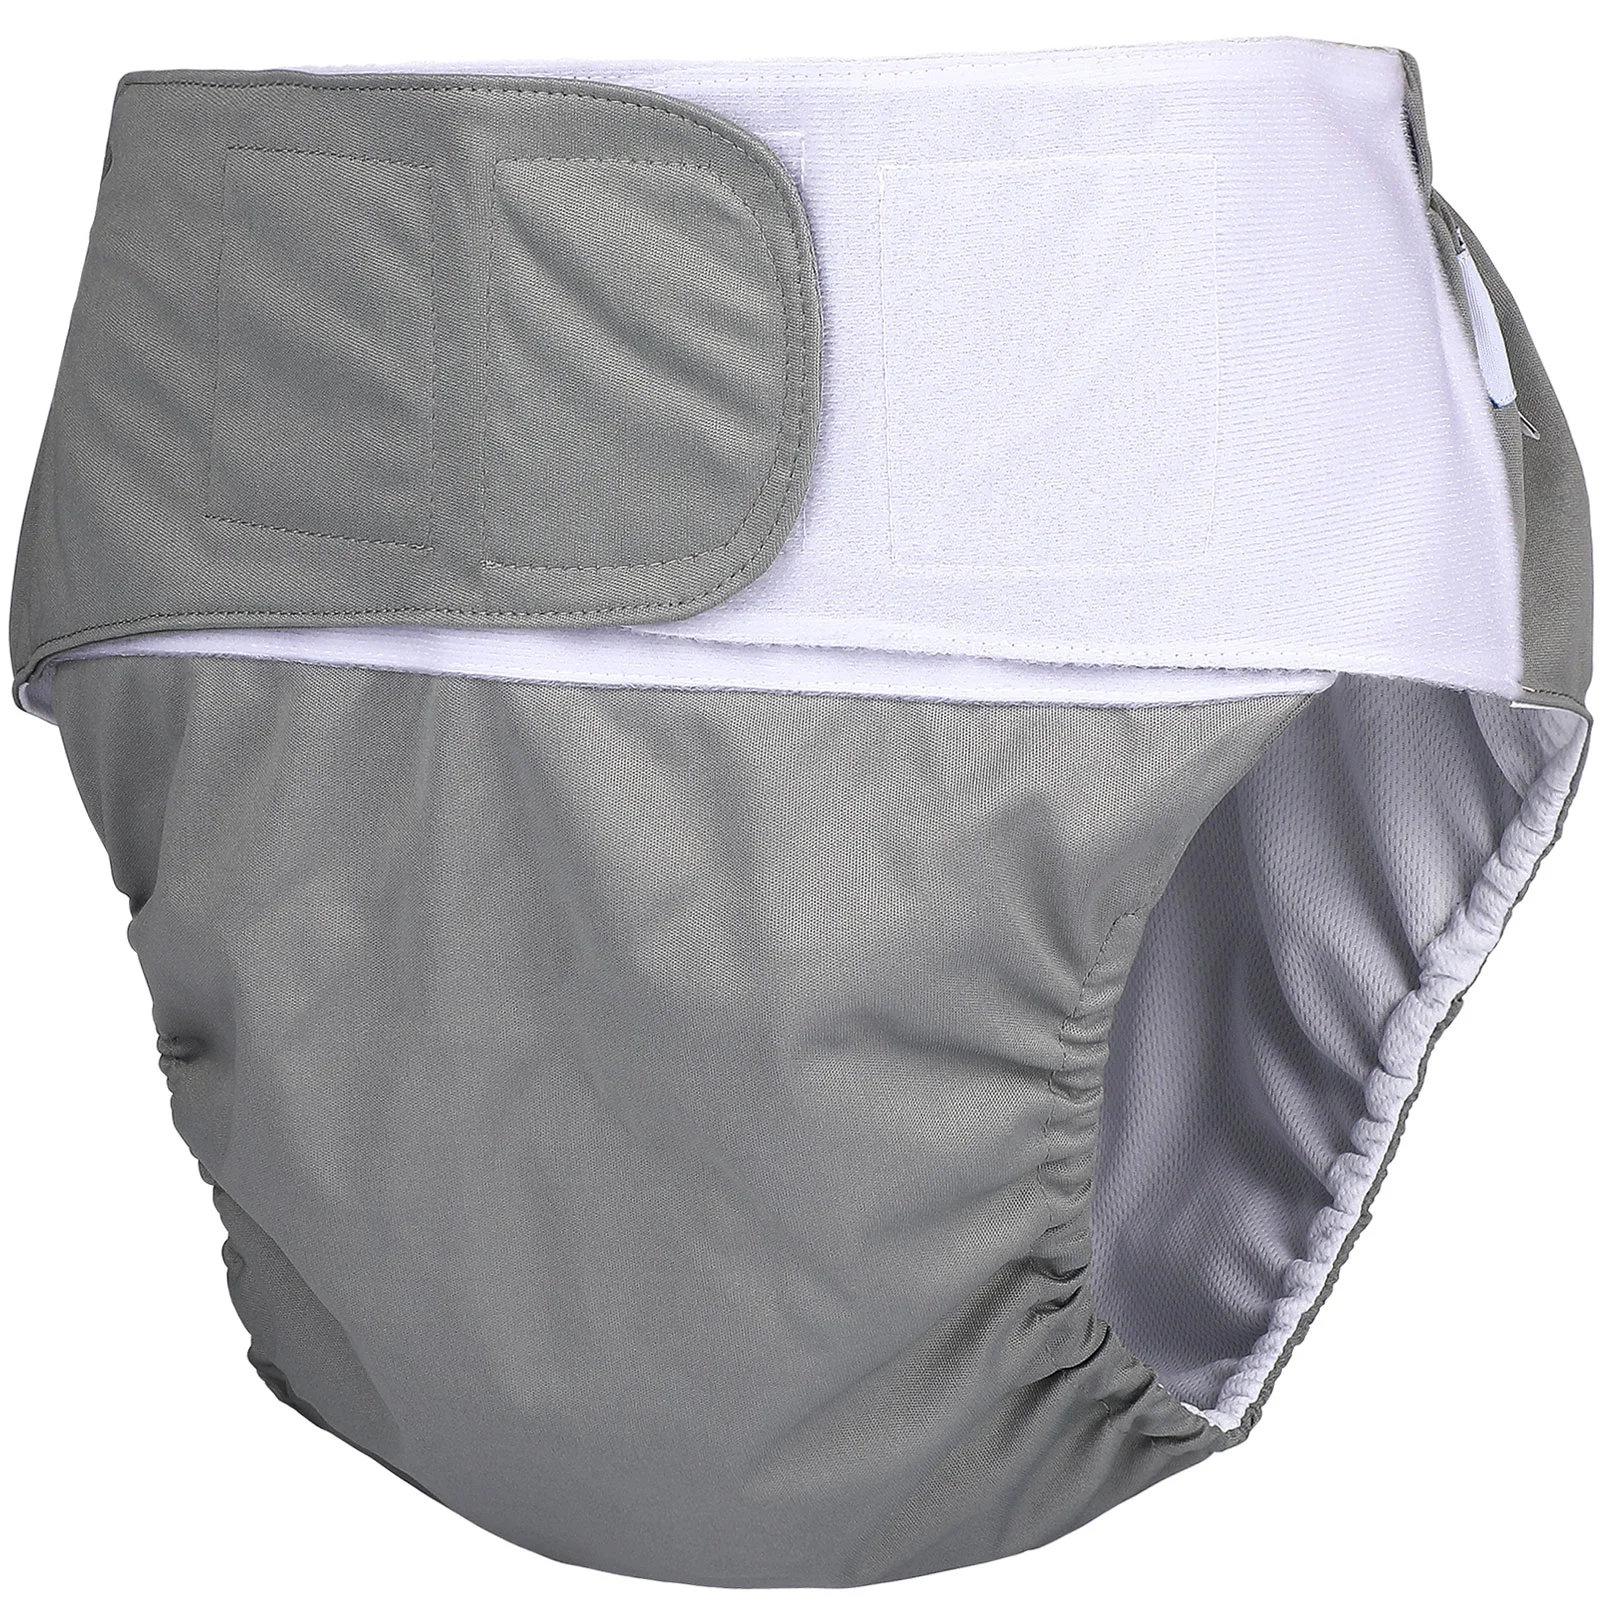 

Adult Diaper Washable Reusable Pants Clothing Leak-free Inserts Patient Diapers Elderly Man Swim